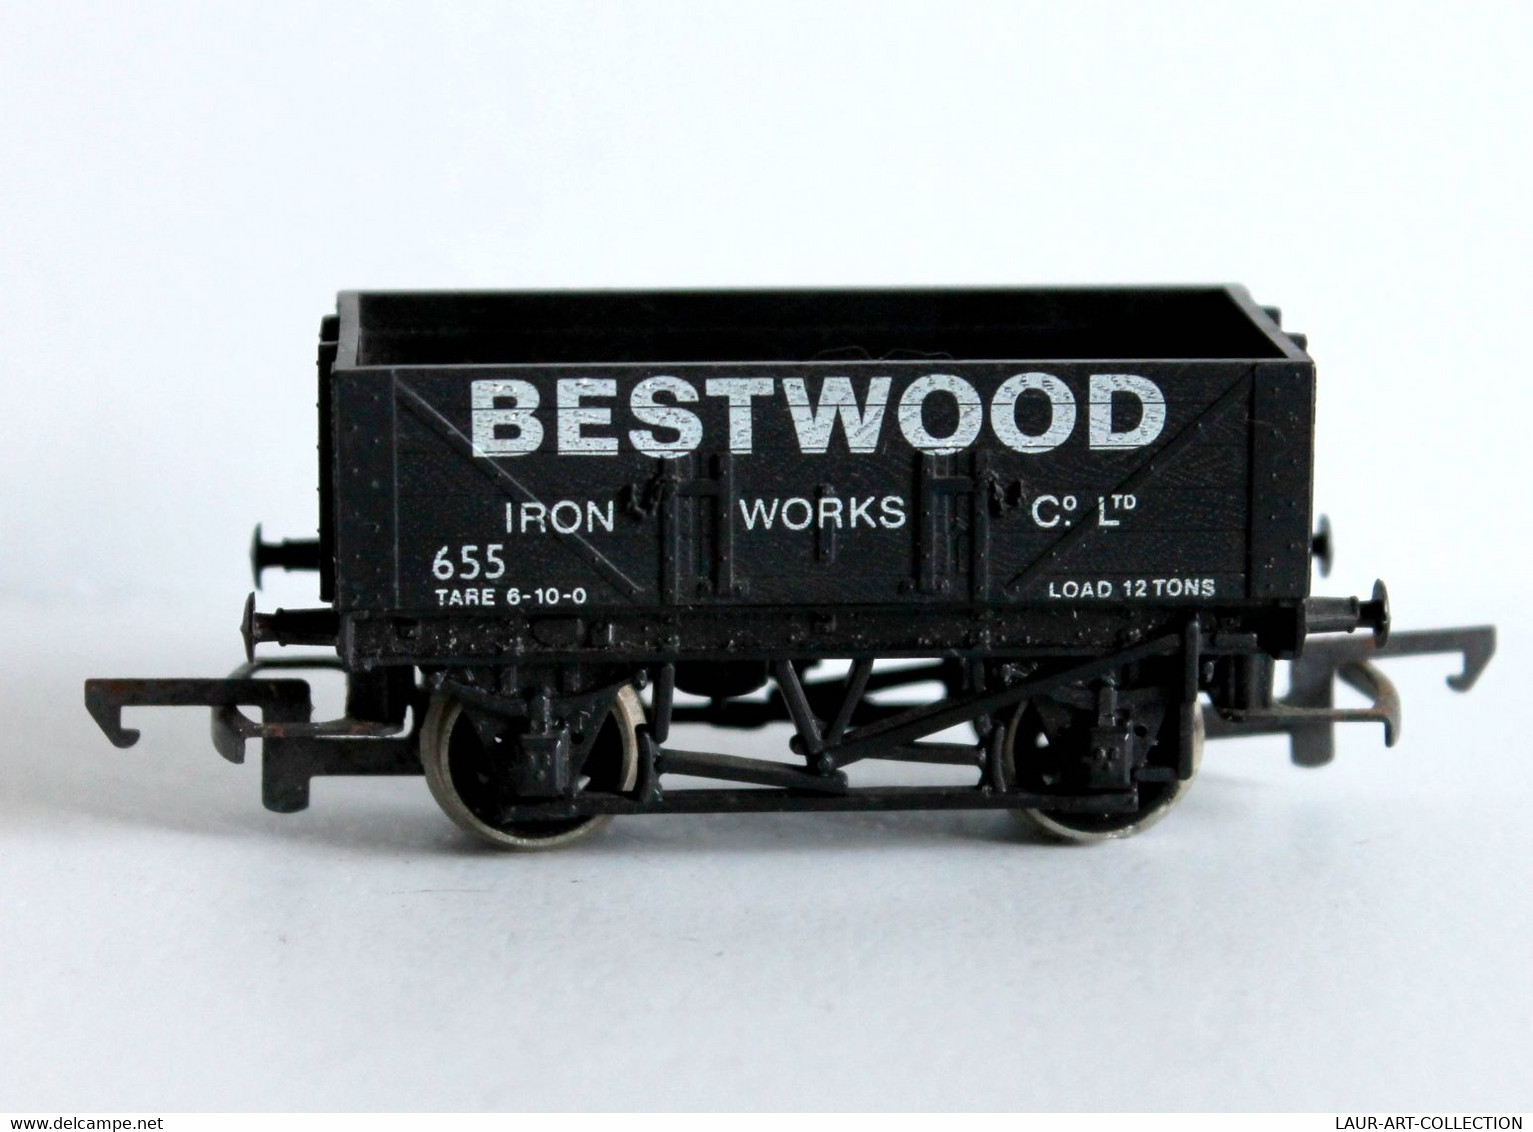 HORNBY RAILWAYS - WAGON TOMBEREAU MARCHANDISE - BESTWOOD IRON WORKS Co Ltd / FERROVIAIRE TRAIN CHEMIN FER  (2304.110) - Goods Waggons (wagons)